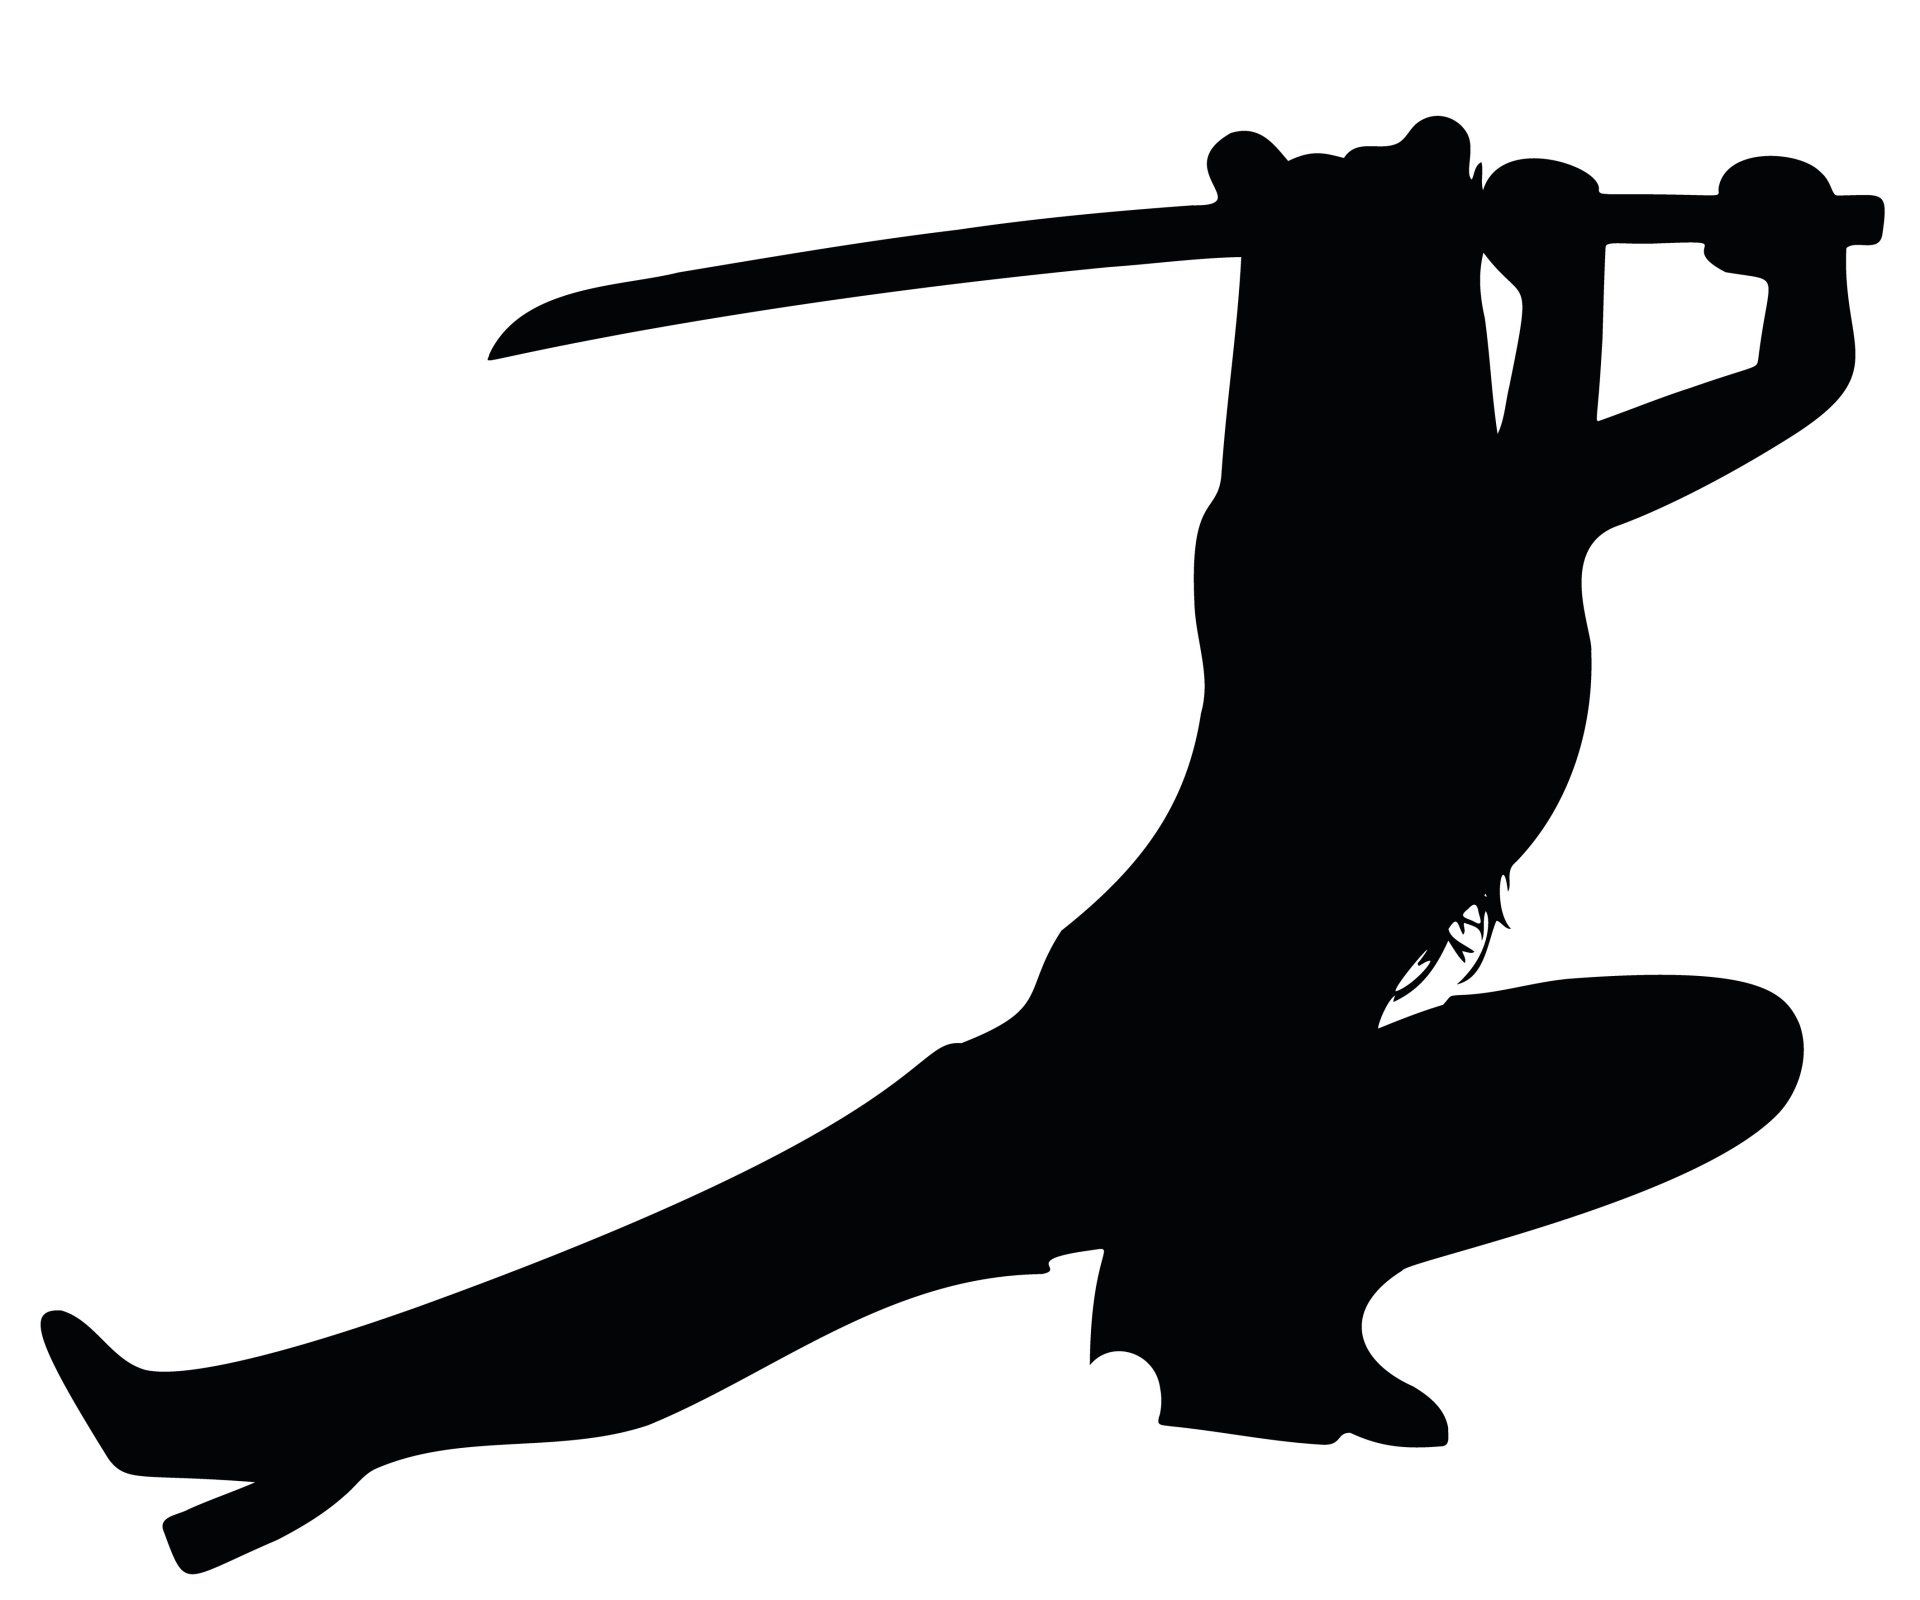 Silhouette of a woman wielding a samurai sword